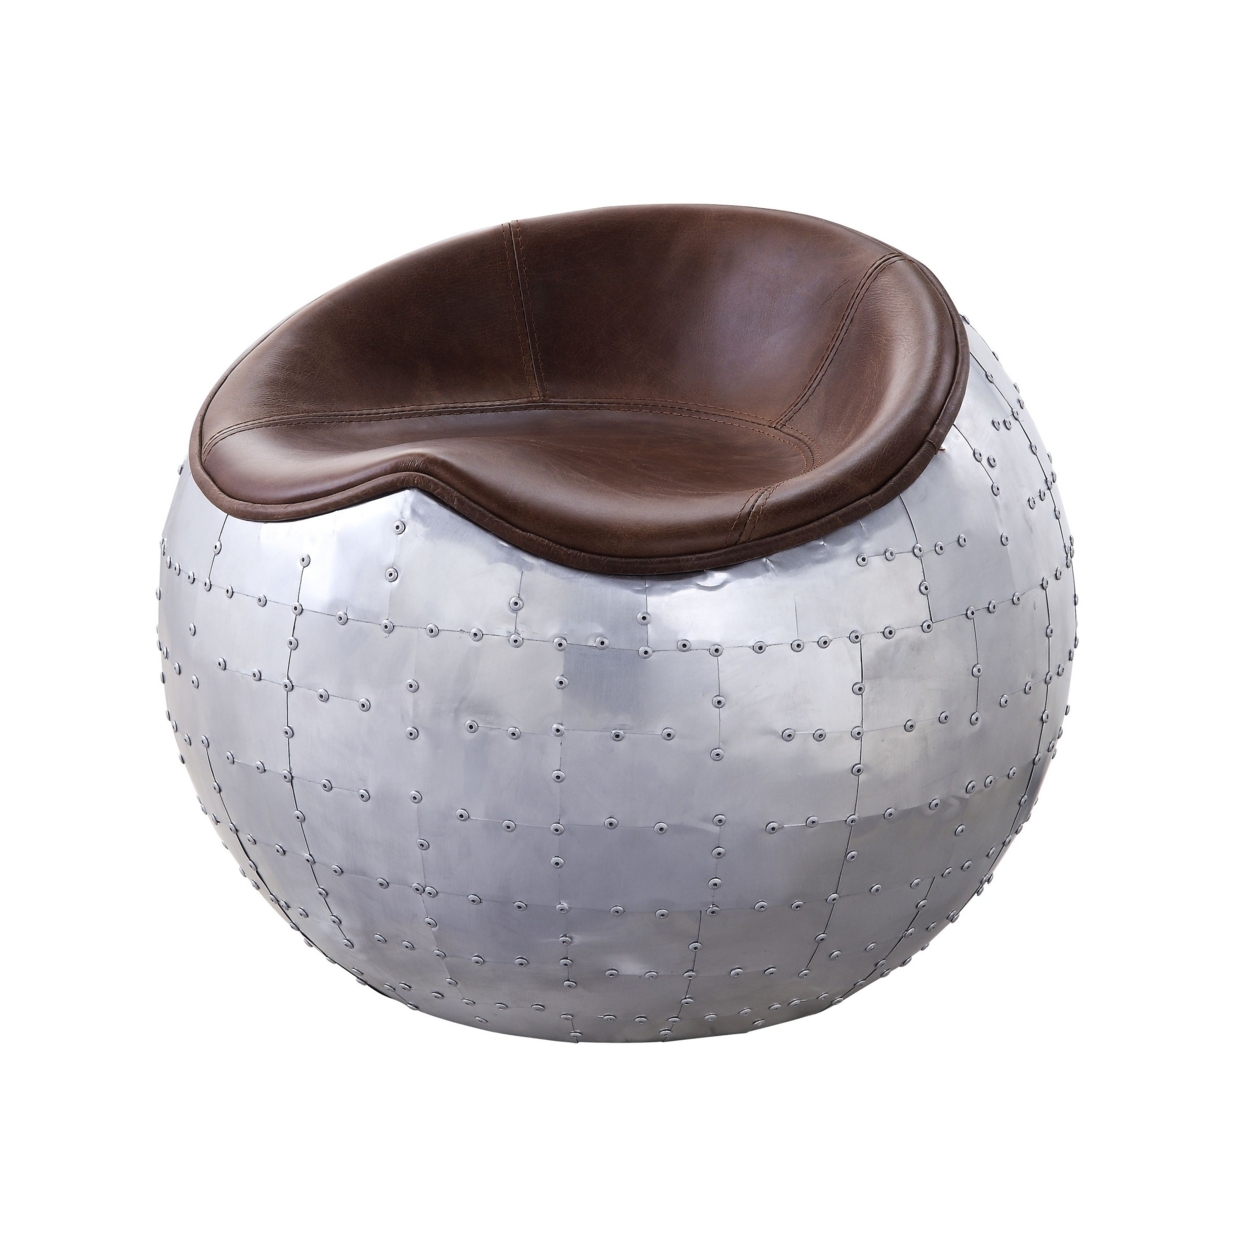 Spherical Metal Ottoman With Leatherette Saddle Seat, Gray And Brown- Saltoro Sherpi